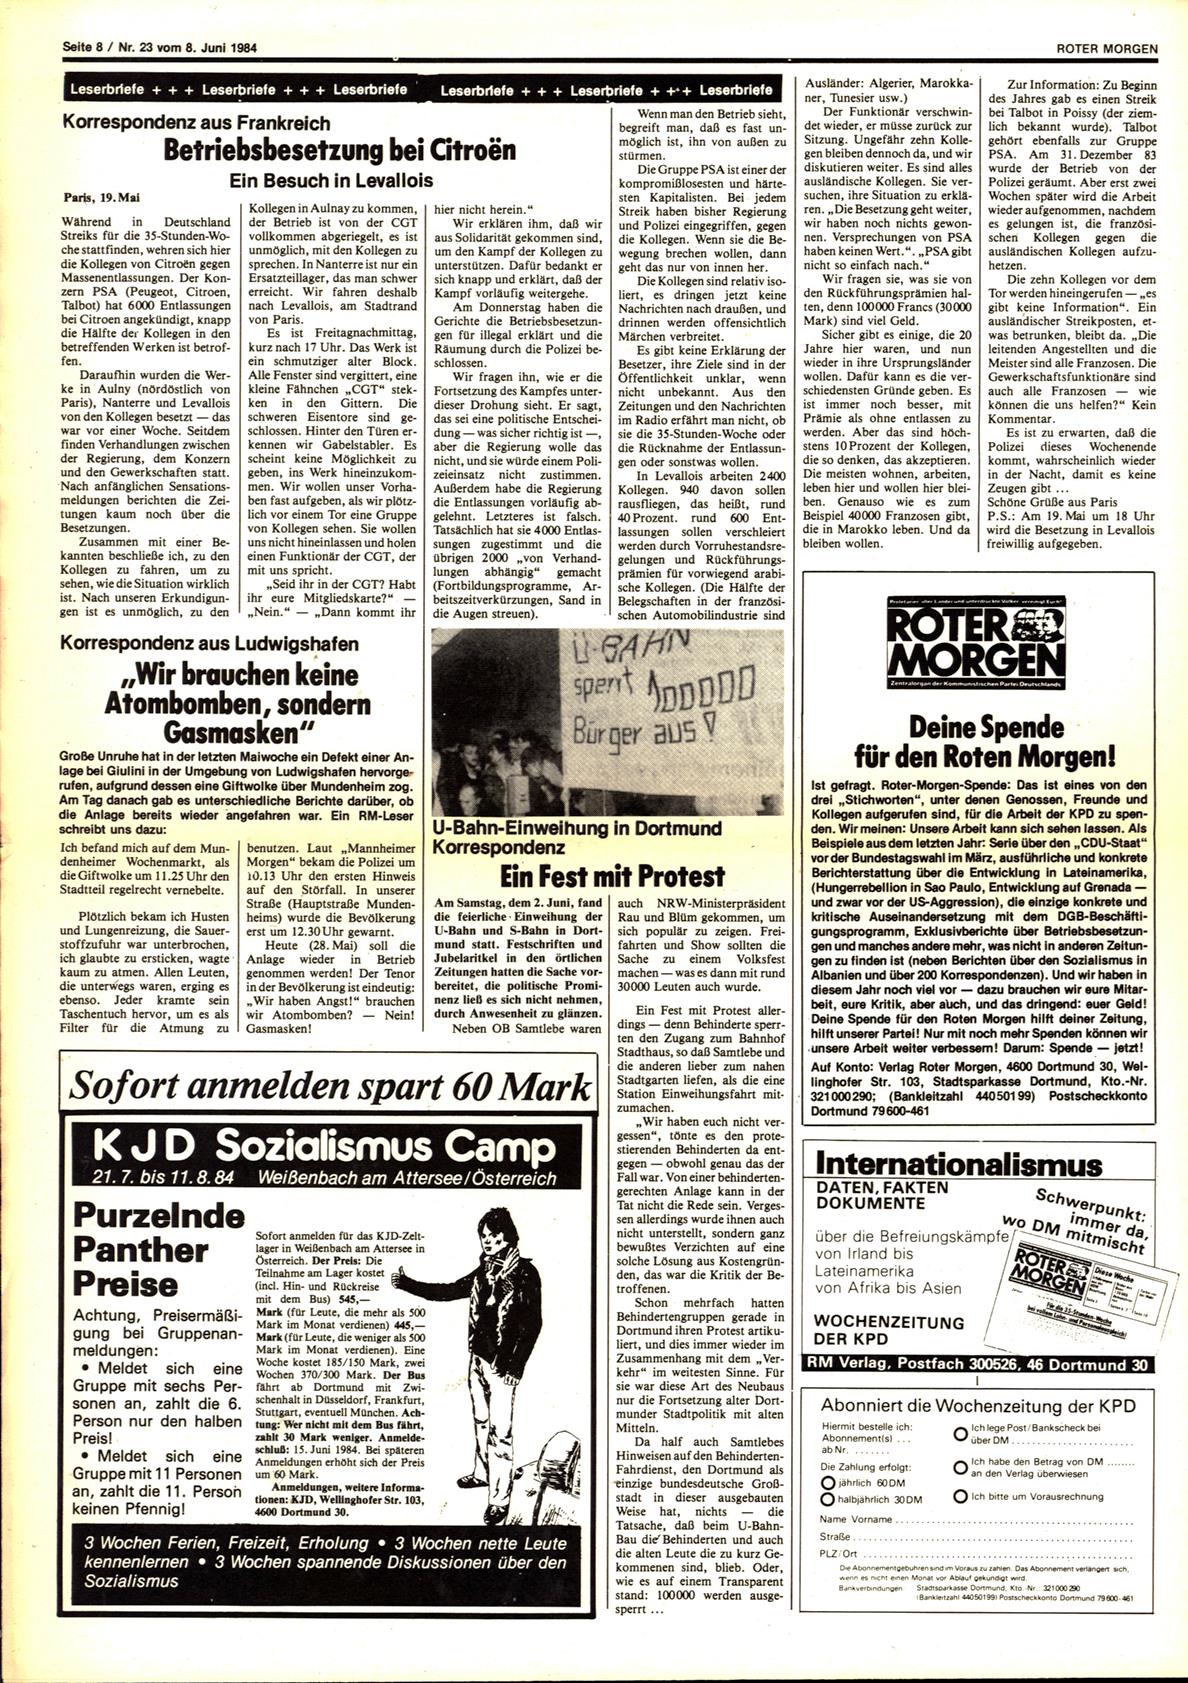 Roter Morgen, 18. Jg., 8. Juni 1984, Nr. 23, Seite 8